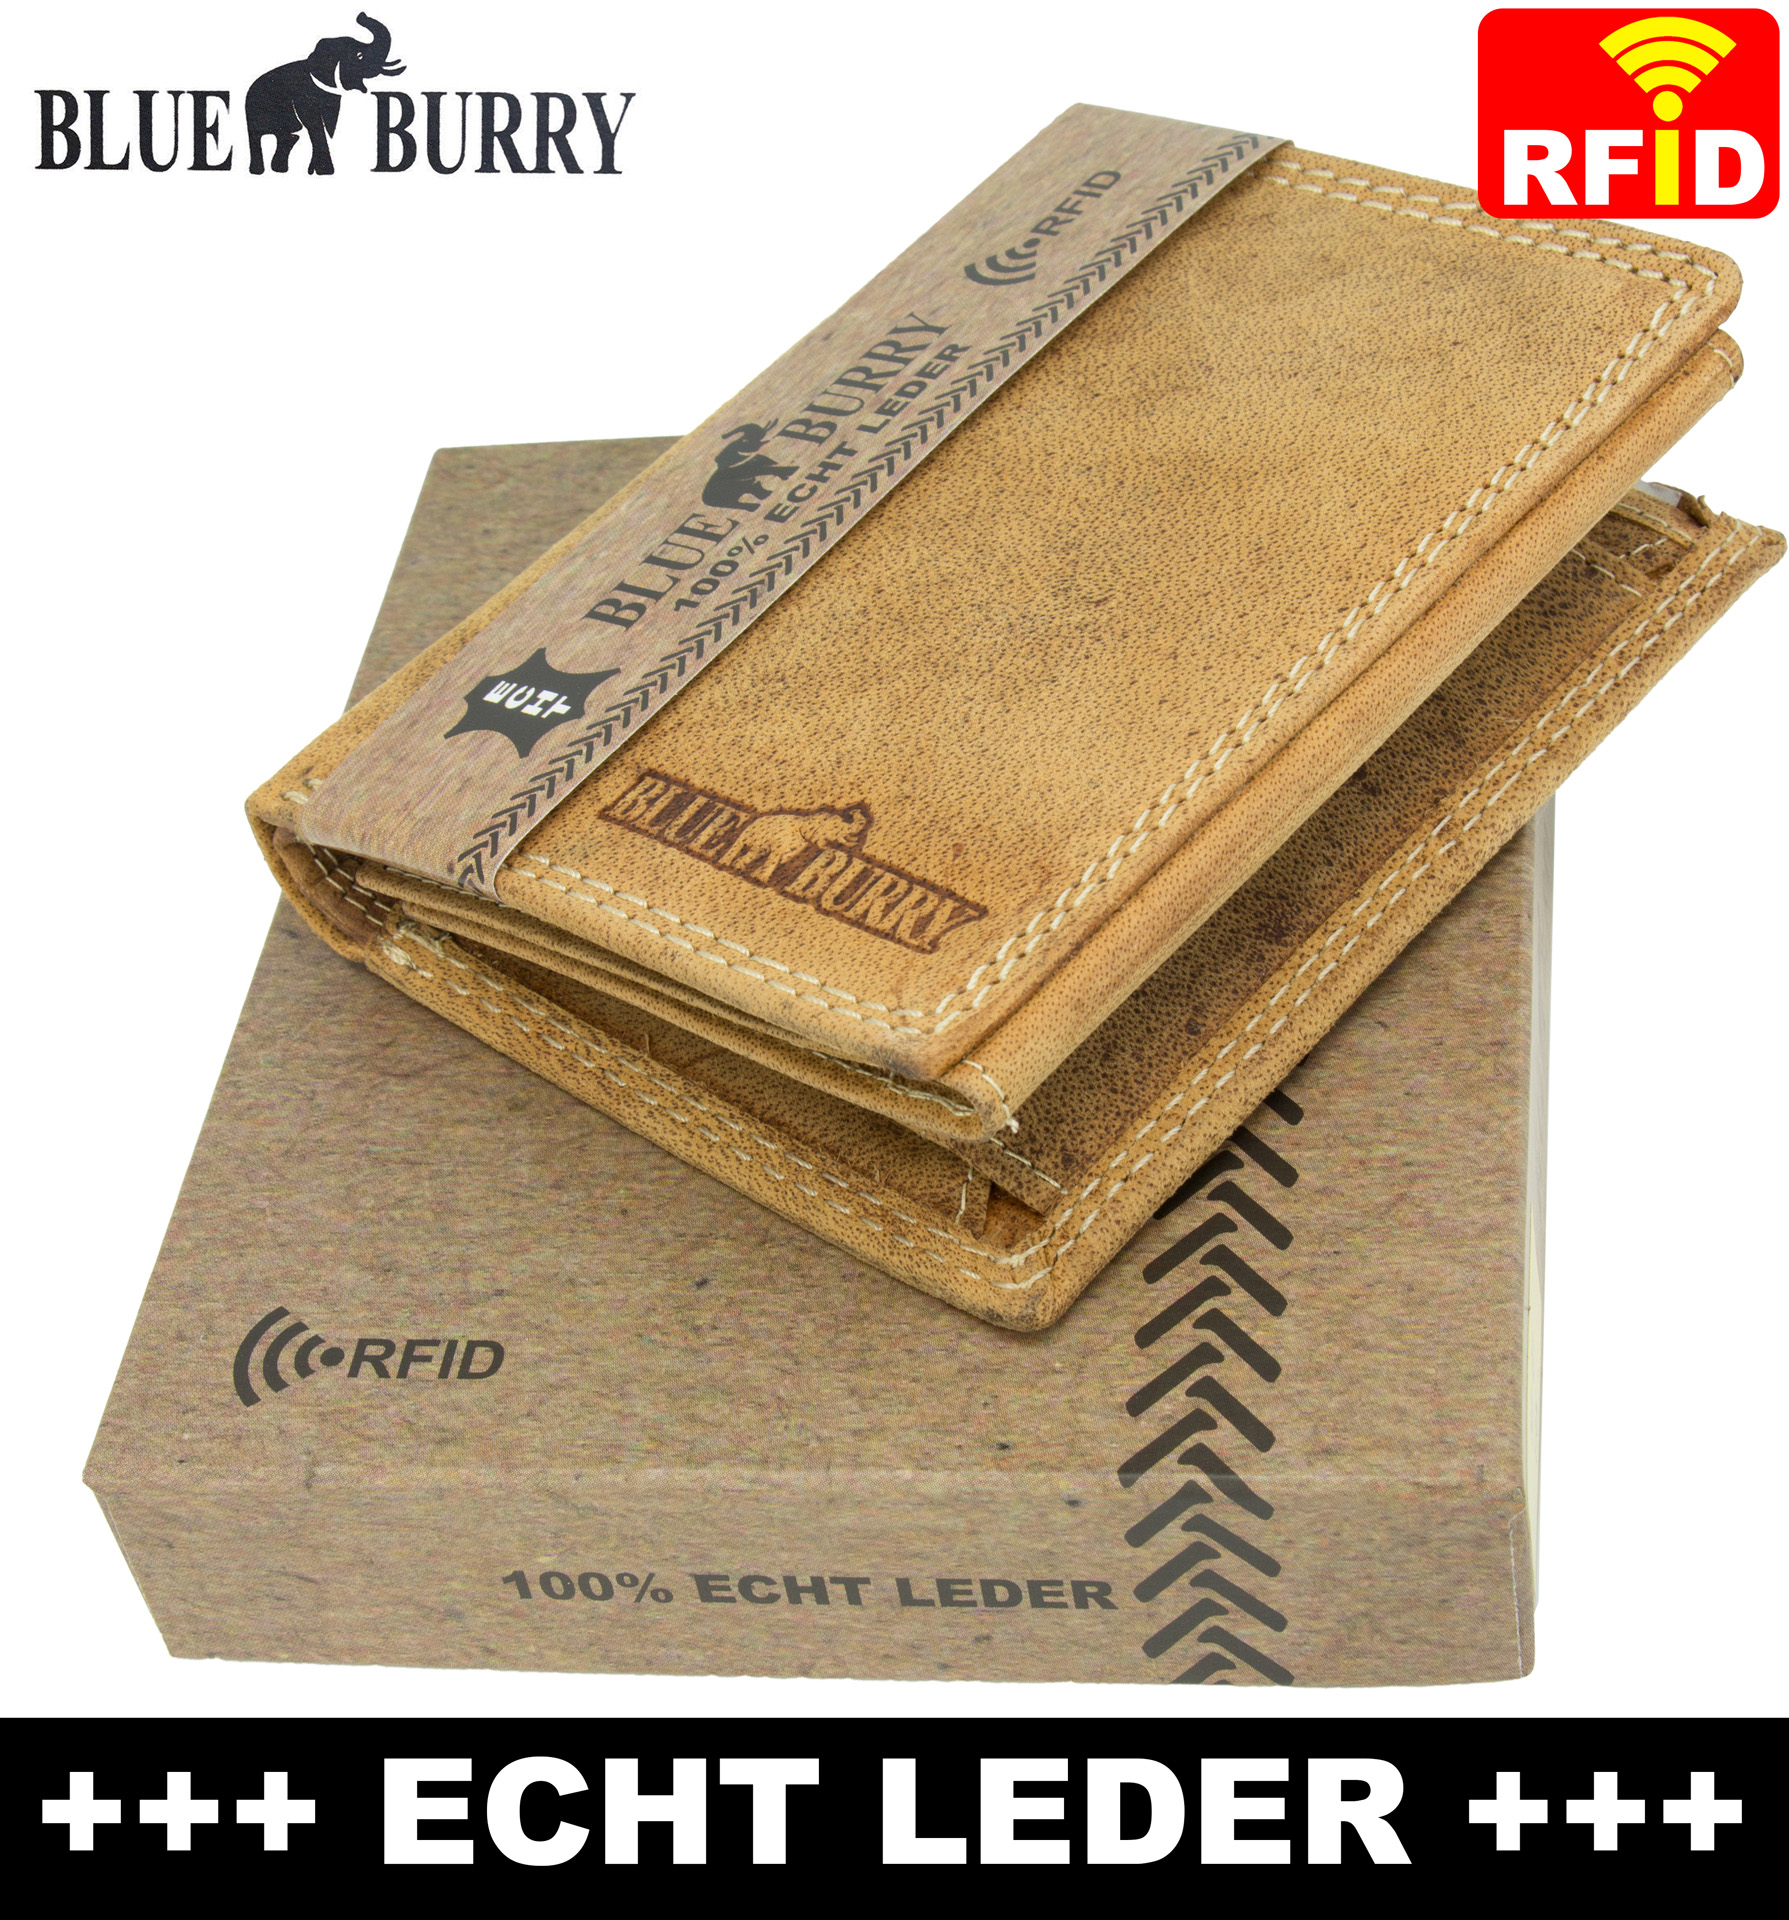 Geldbörse Echtleder 089 Blue Burry Herren Lederbörse RFID-Schutz Portemonnaie 